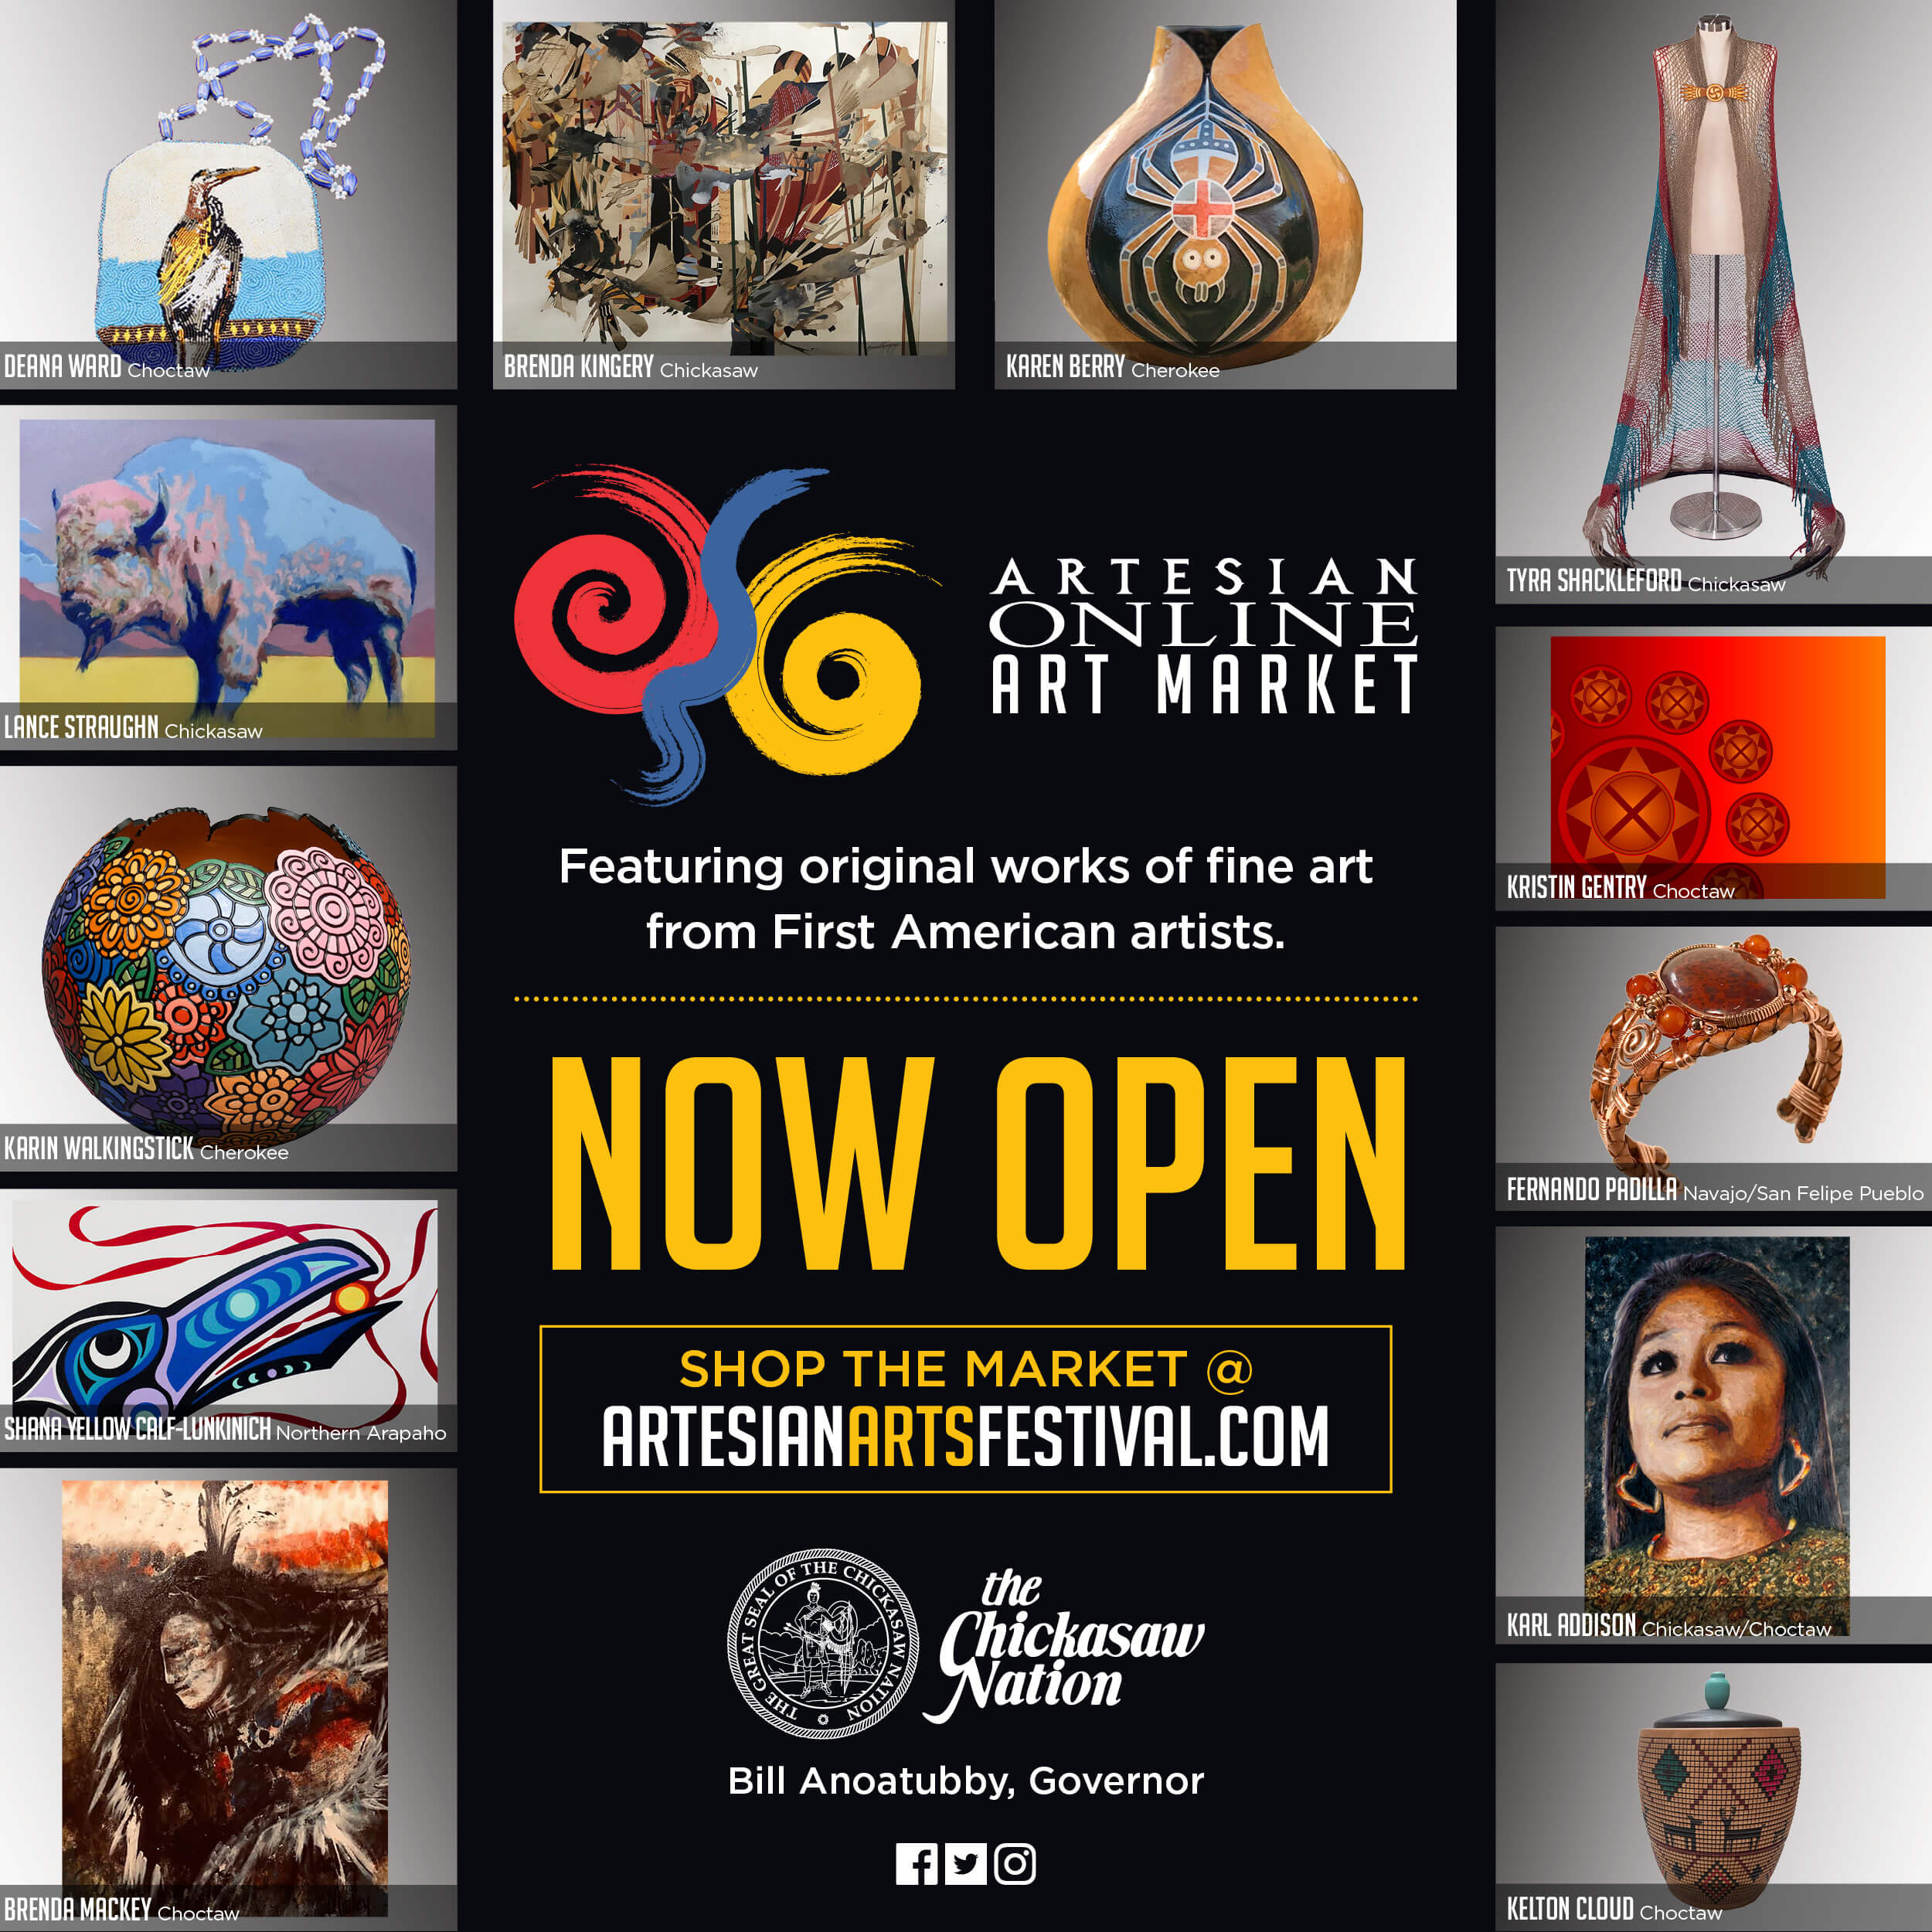 Artesian Online Art Market